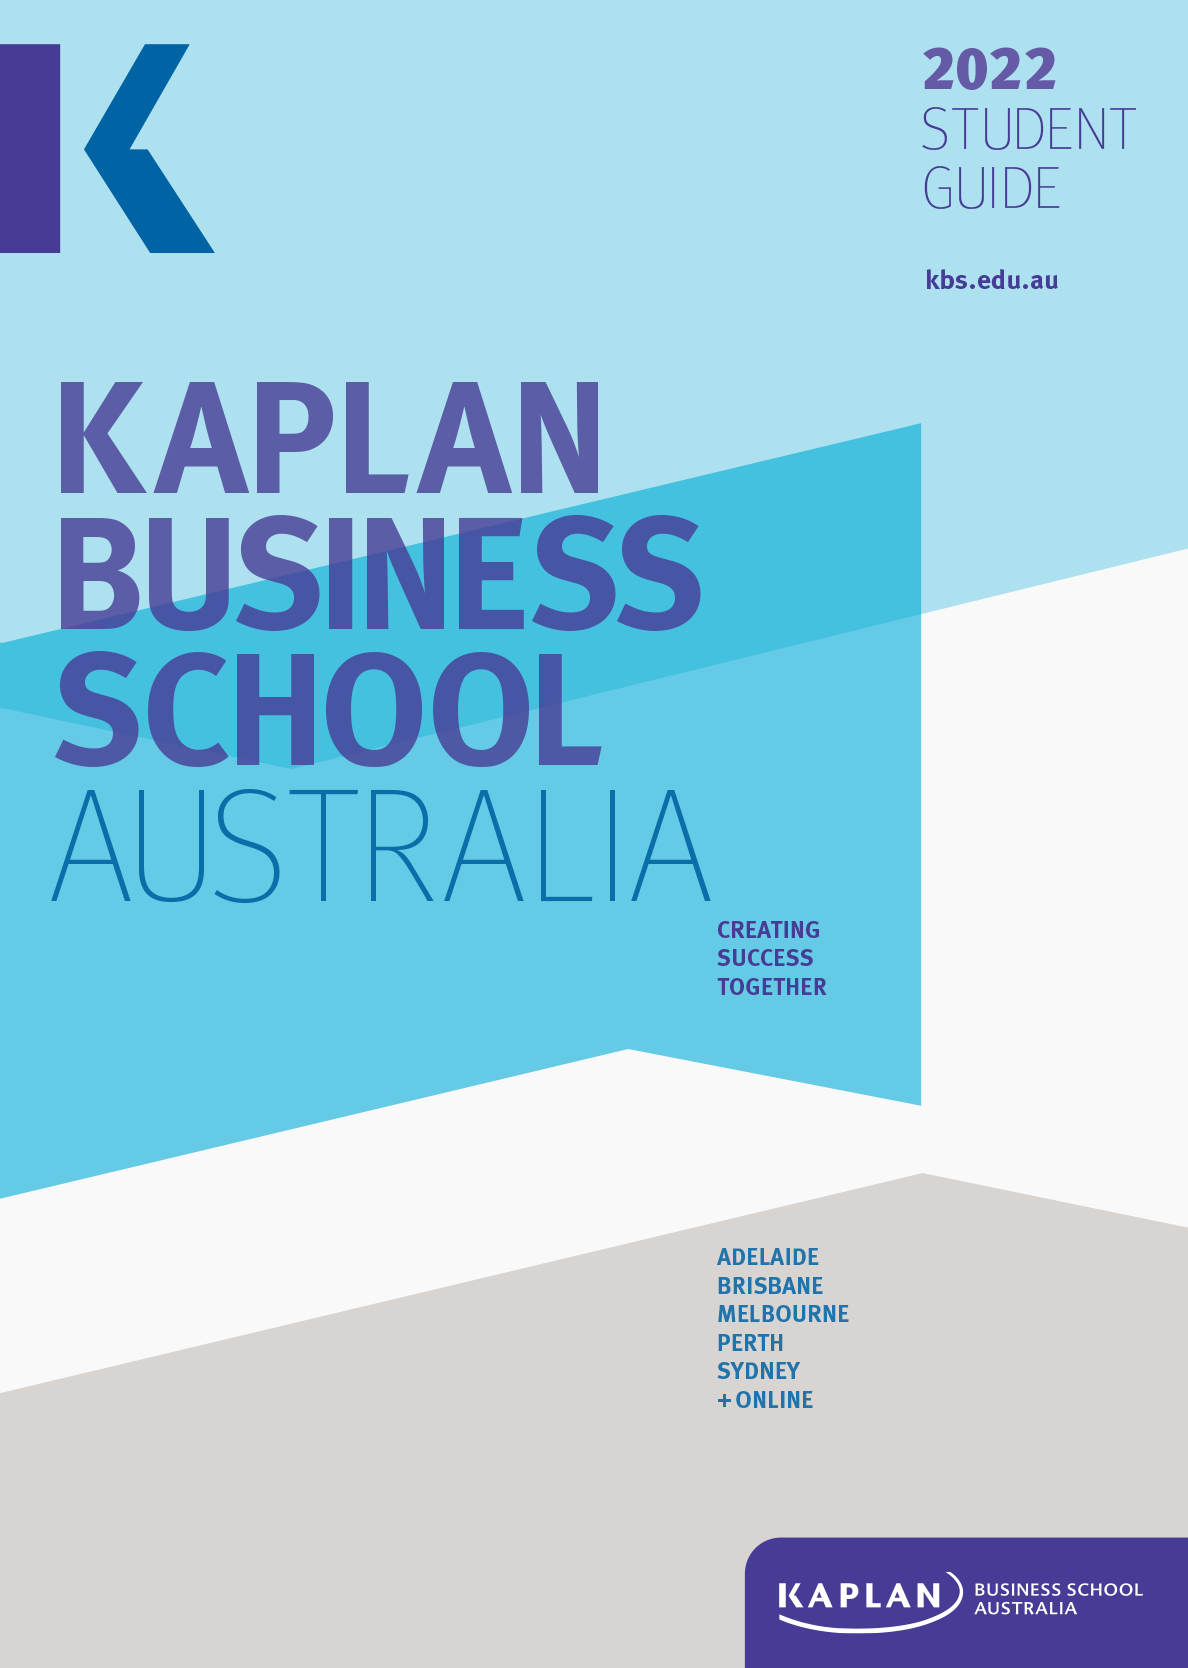 Kaplan Business School brochure / student guide